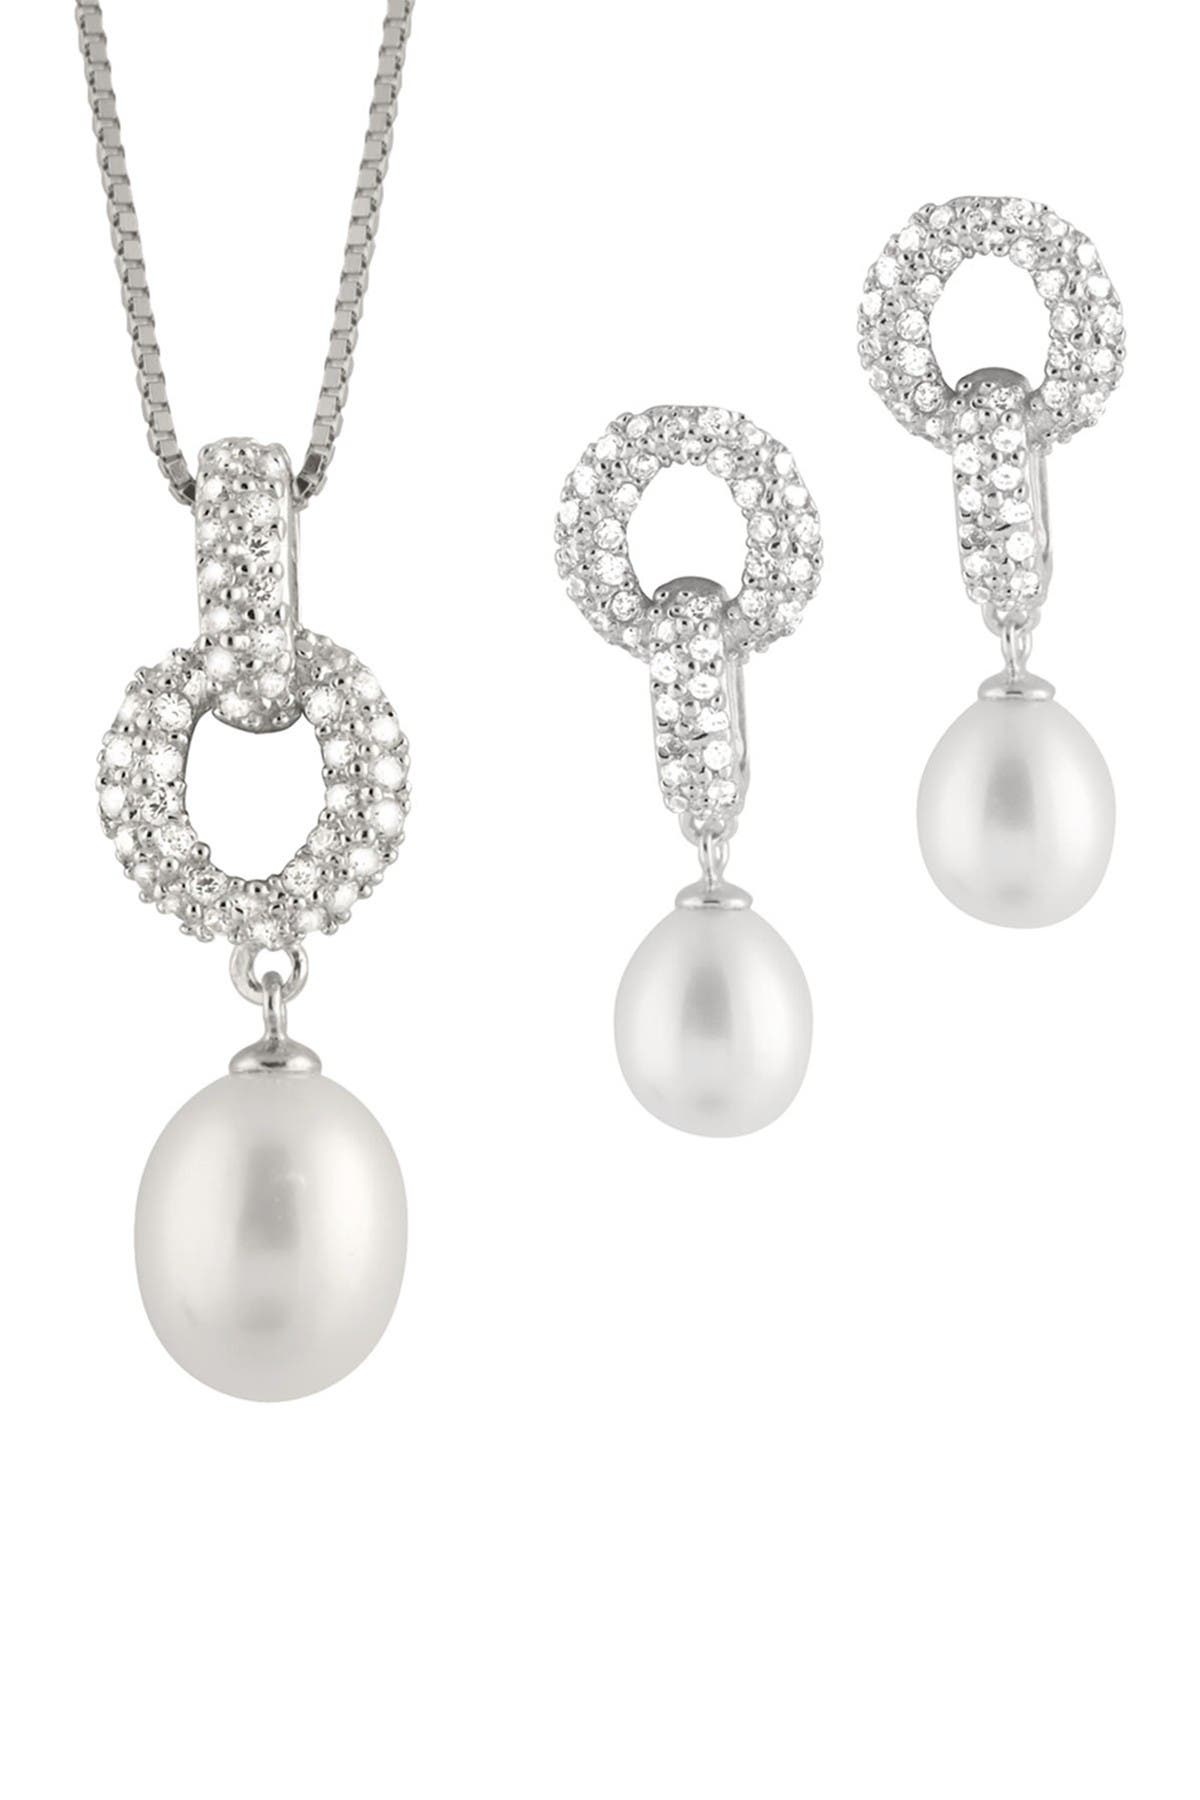 Splendid Pearls Cz Link & 8-9mm White Freshwater Pearl Necklace & Earrings Set